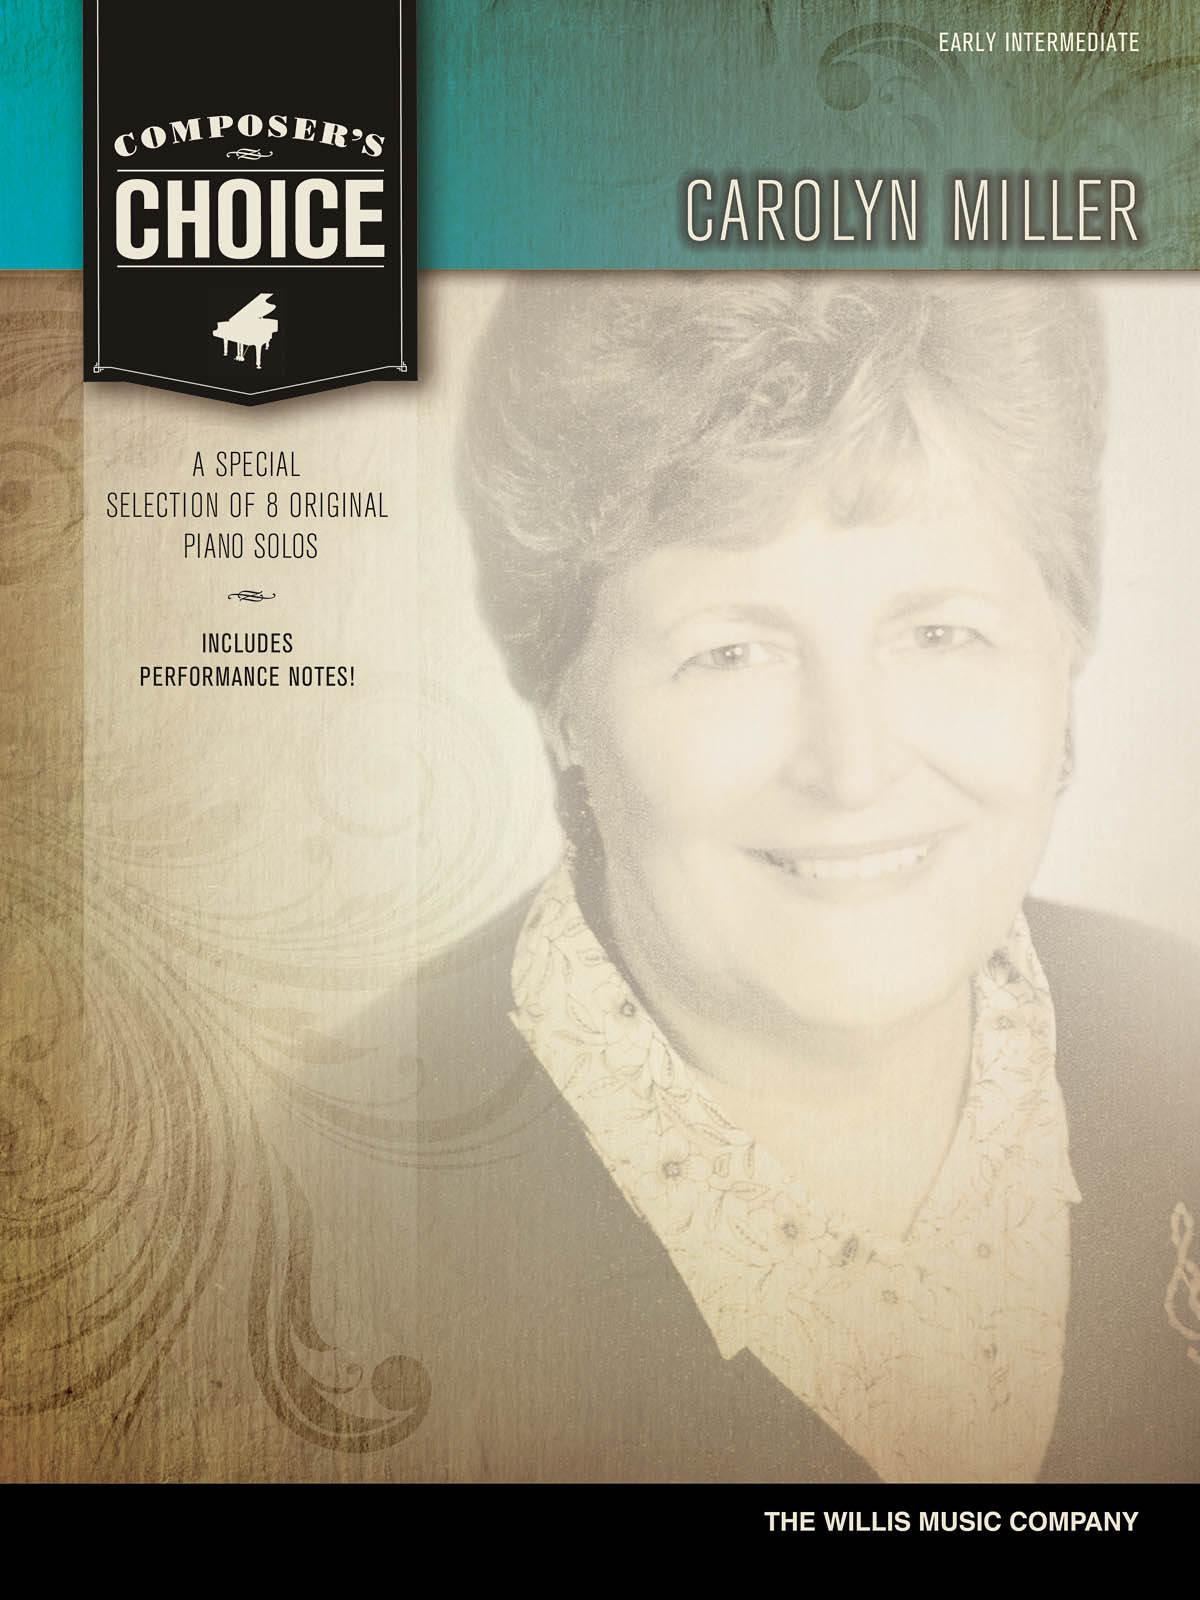 Composer’s Choice – Carolyn Miller